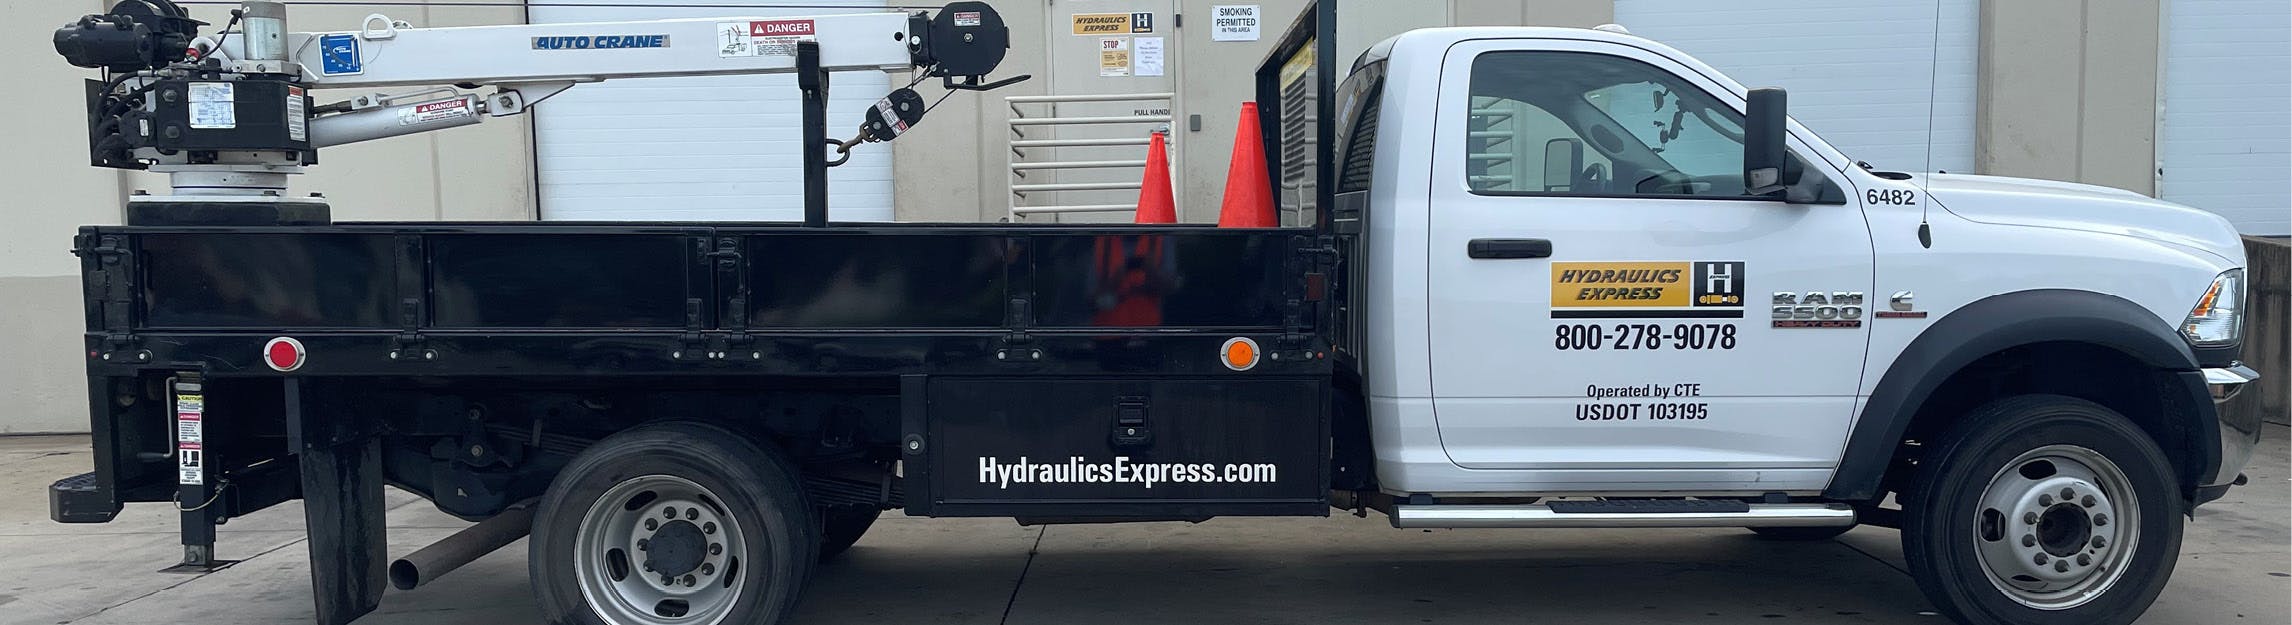 Hydraulics Express Truck.